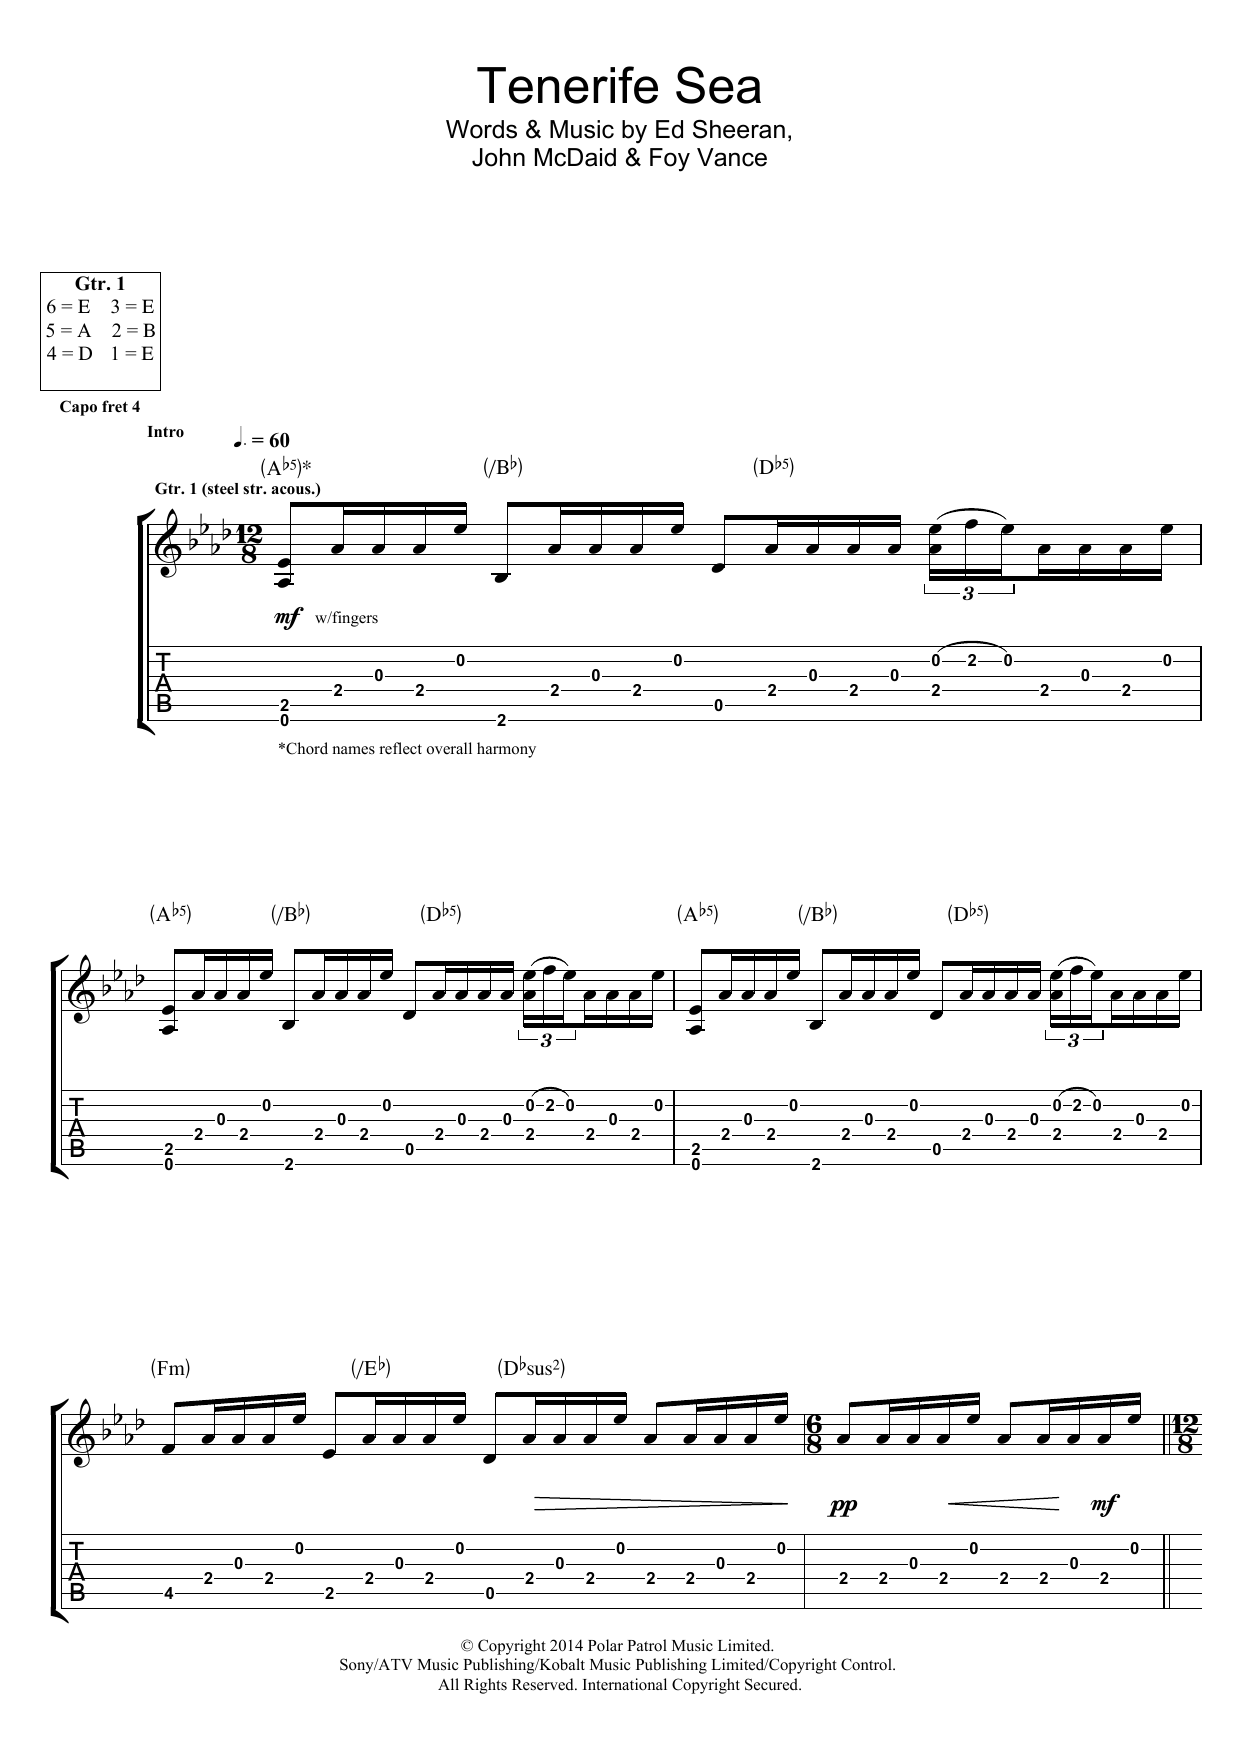 Ed Sheeran Tenerife Sea Sheet Music Notes & Chords for Easy Piano - Download or Print PDF